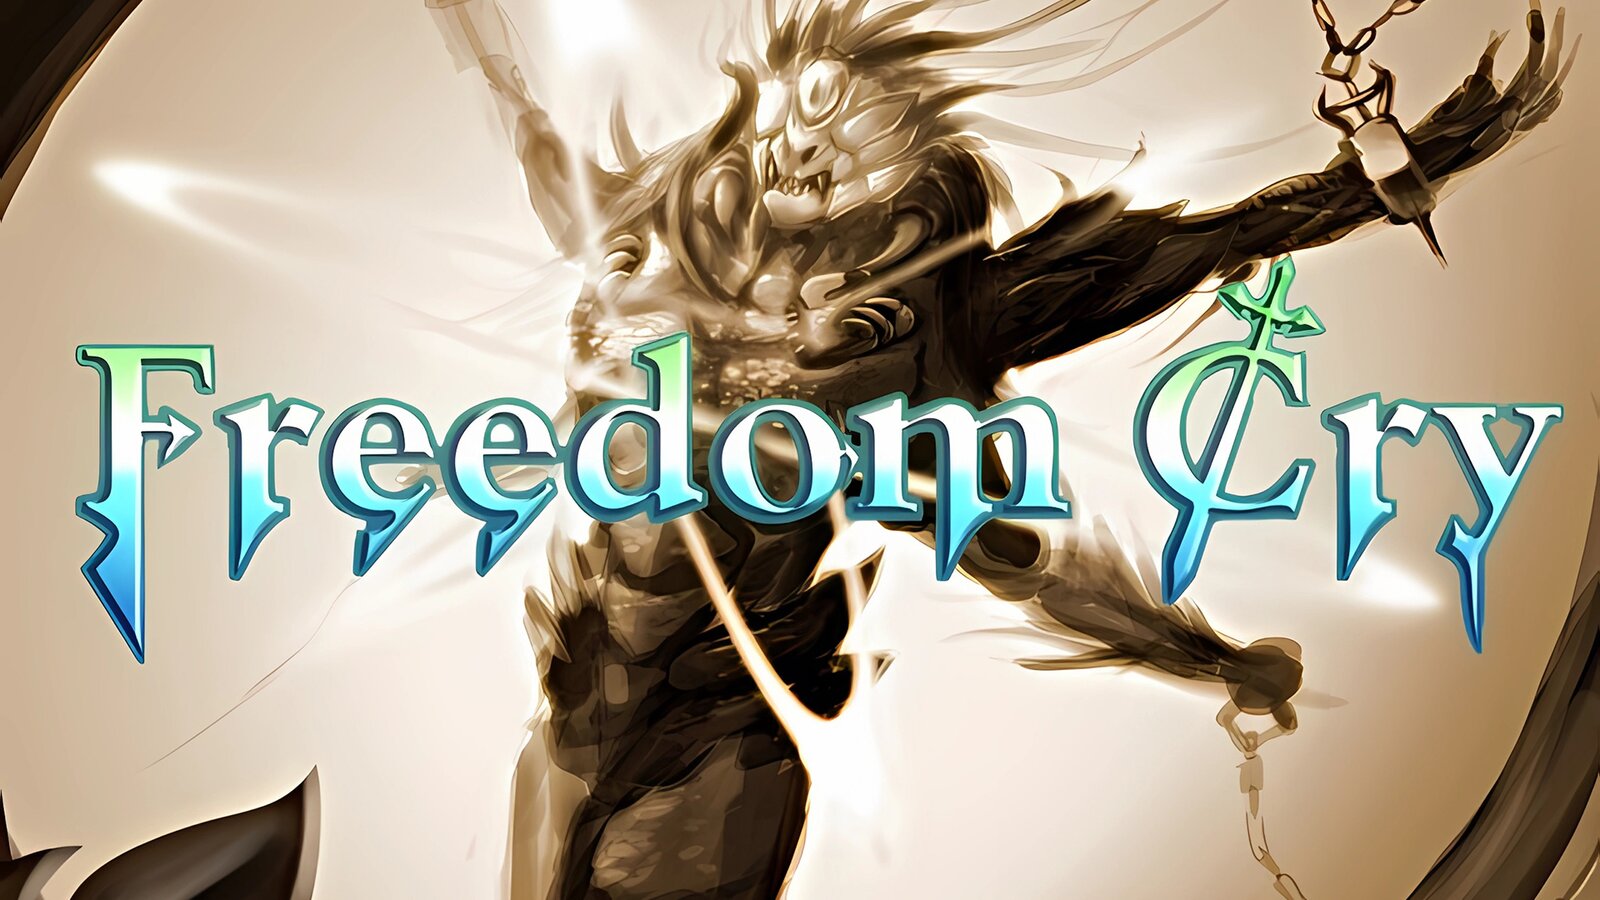 Freedom Cry